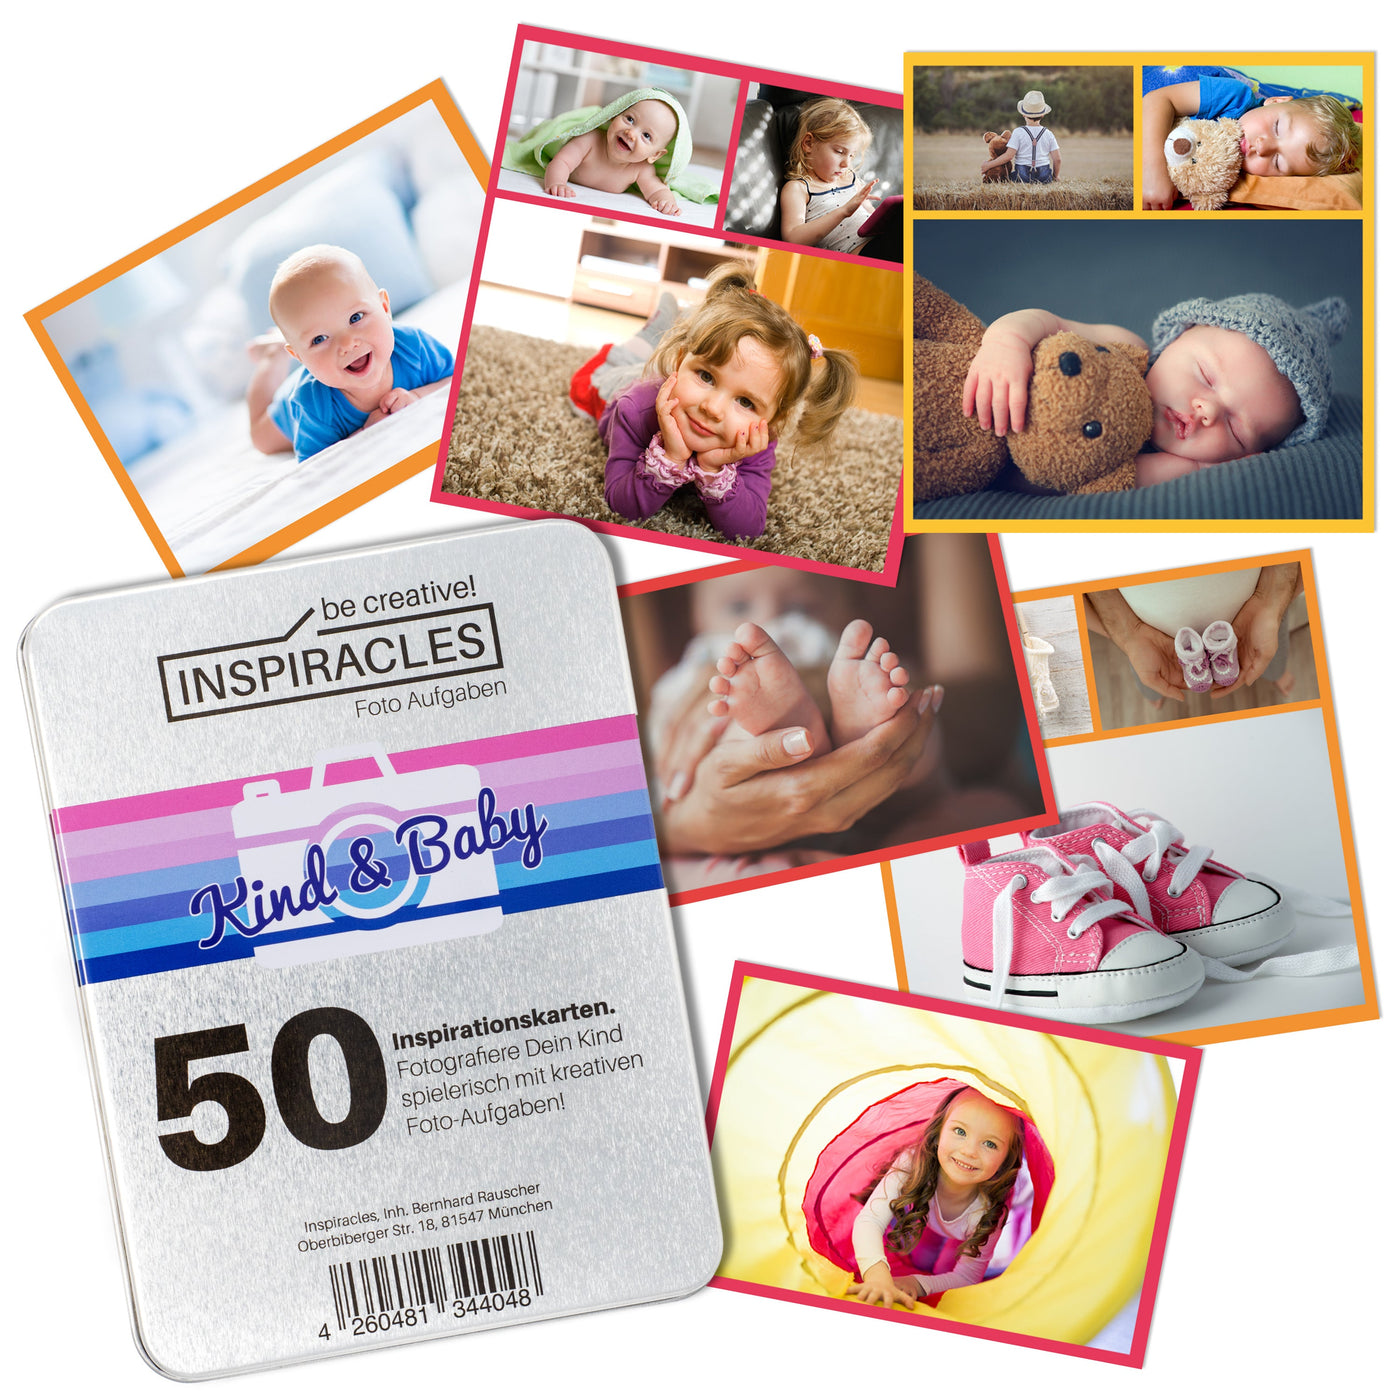 Inspiracles Fotoaufgaben Baby- & Kinderfotografie Edition - 